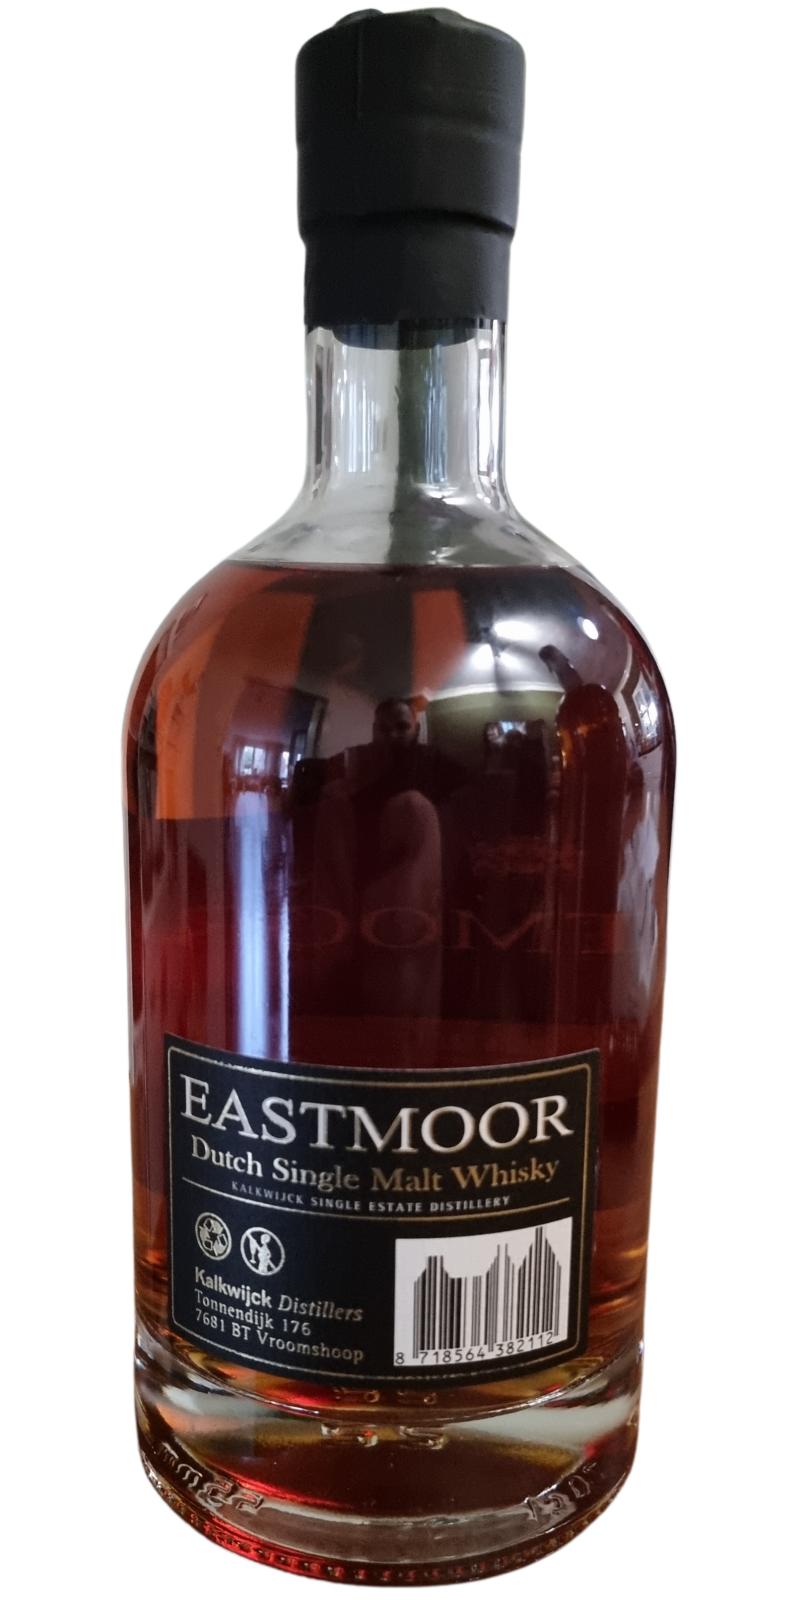 Eastmoor 2019